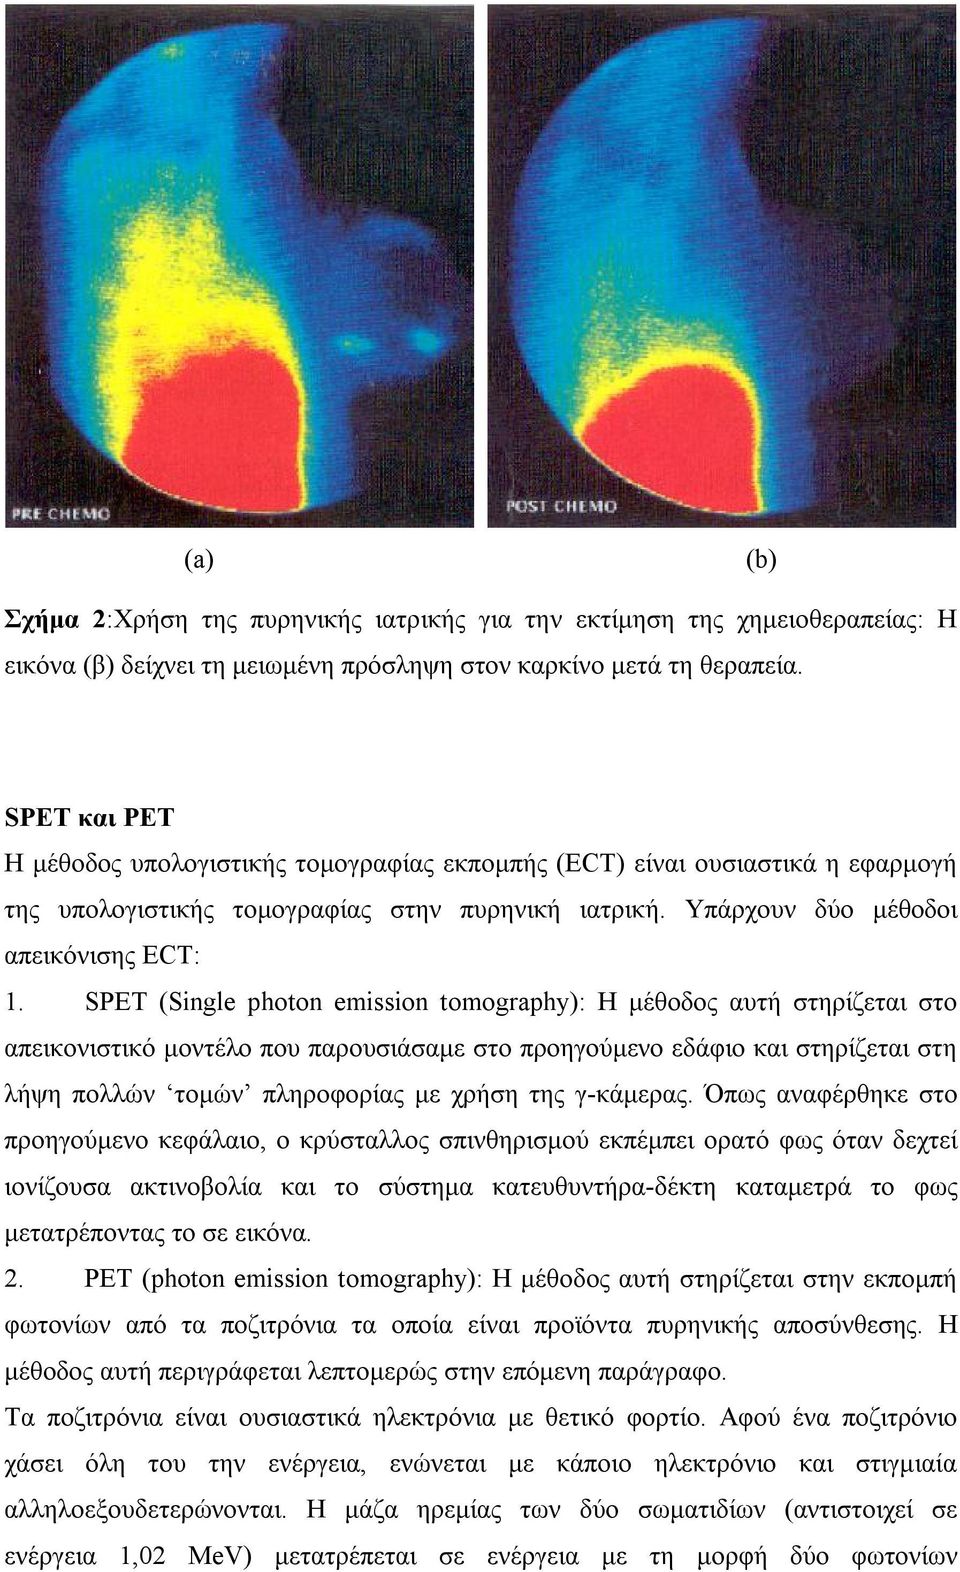 SPET (Single photon emission tomography): Η μέθοδος αυτή στηρίζεται στο απεικονιστικό μοντέλο που παρουσιάσαμε στο προηγούμενο εδάφιο και στηρίζεται στη λήψη πολλών τομών πληροφορίας με χρήση της